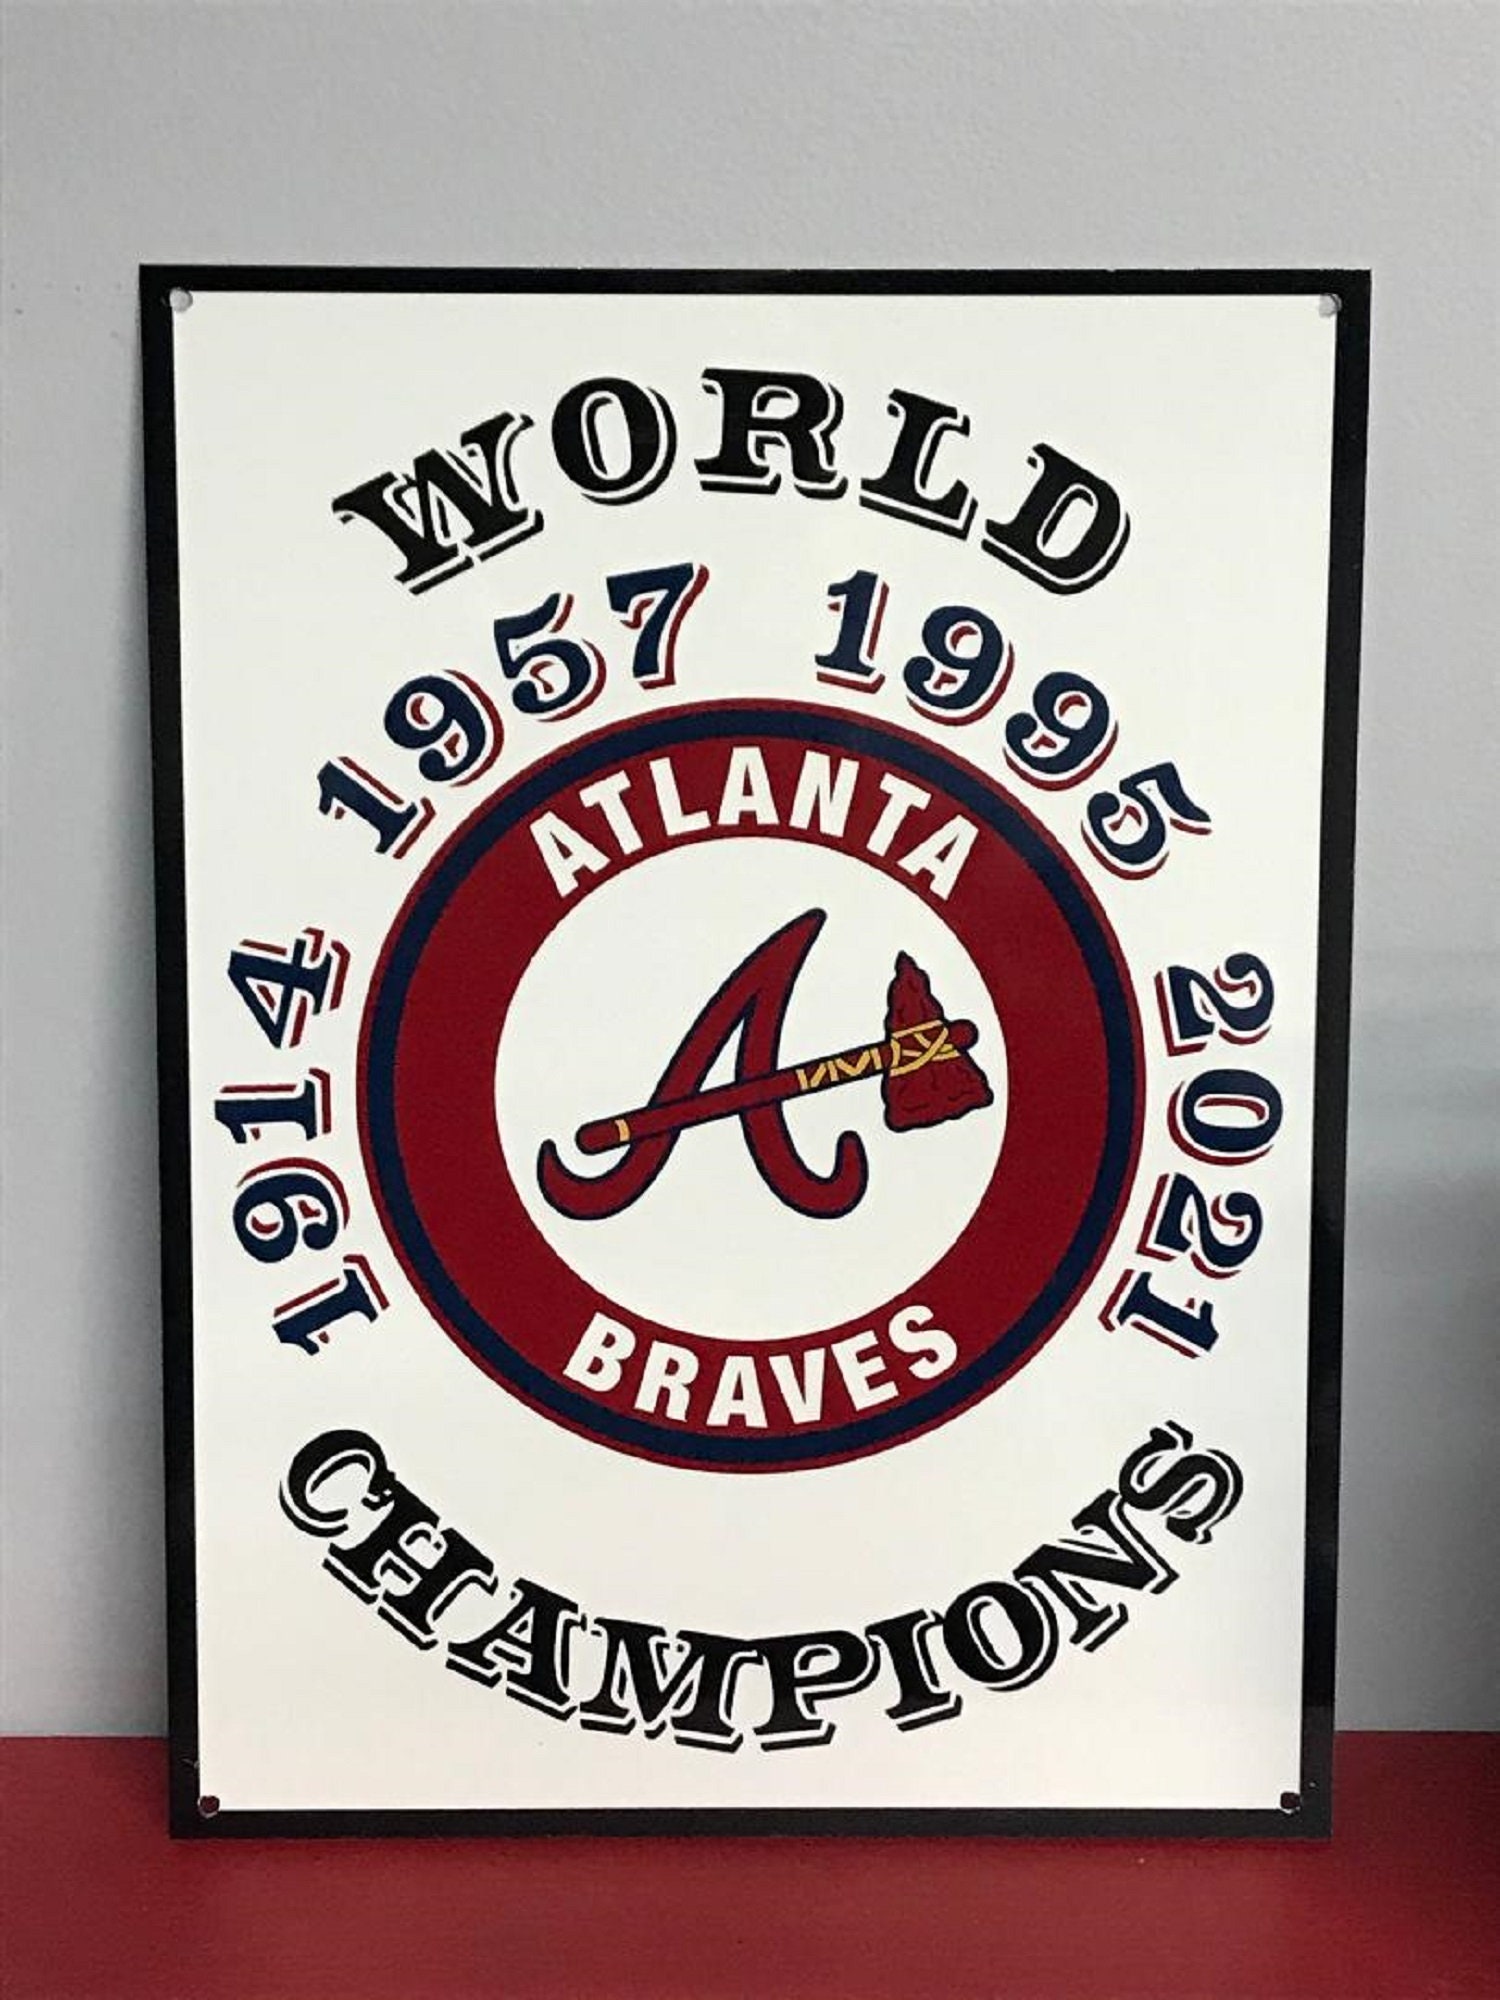 deadmansupplyco Atlanta Braves - 1995 World Series Champions (Red) T-Shirt